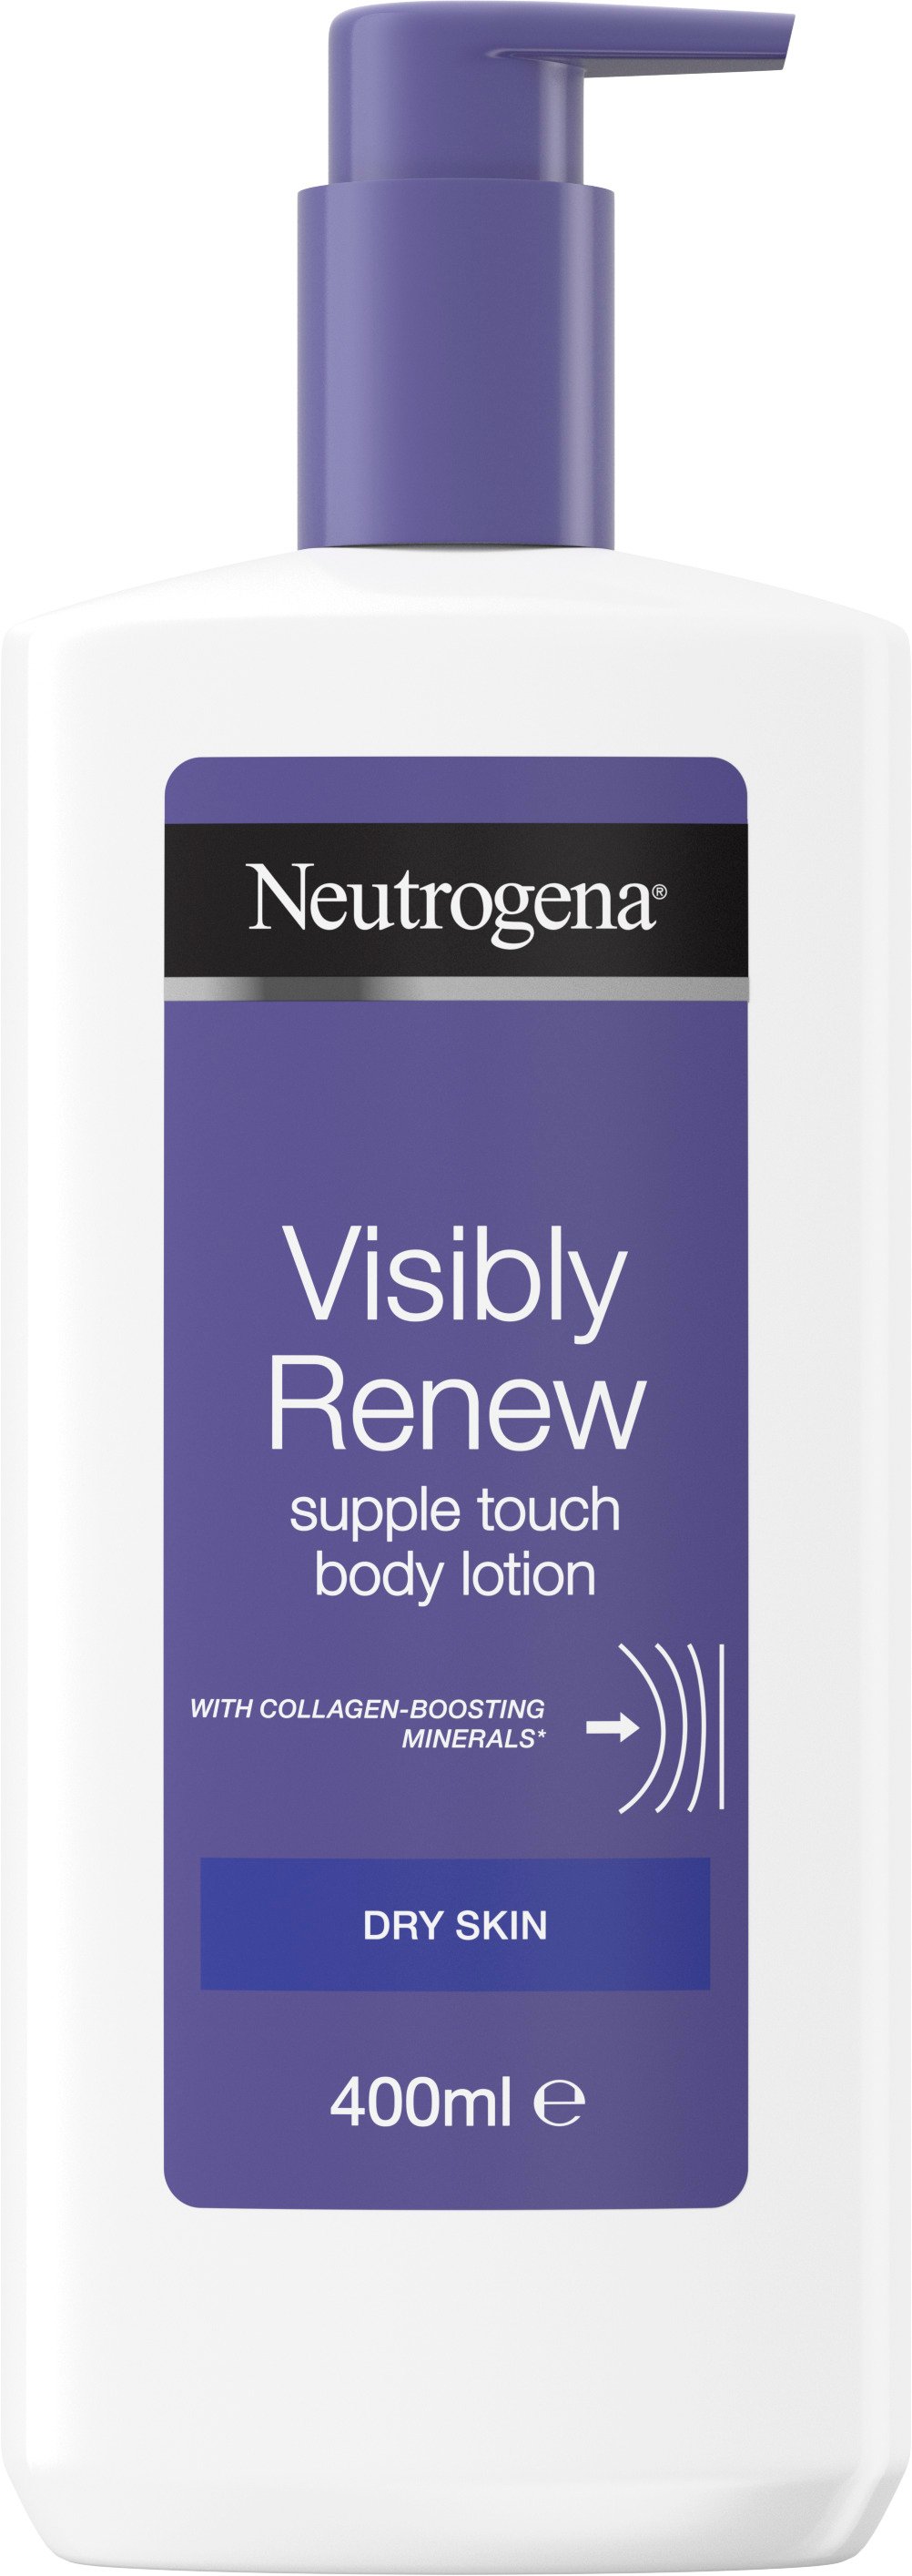 Neutrogena Visibly Renew Body Lotion 400 ml